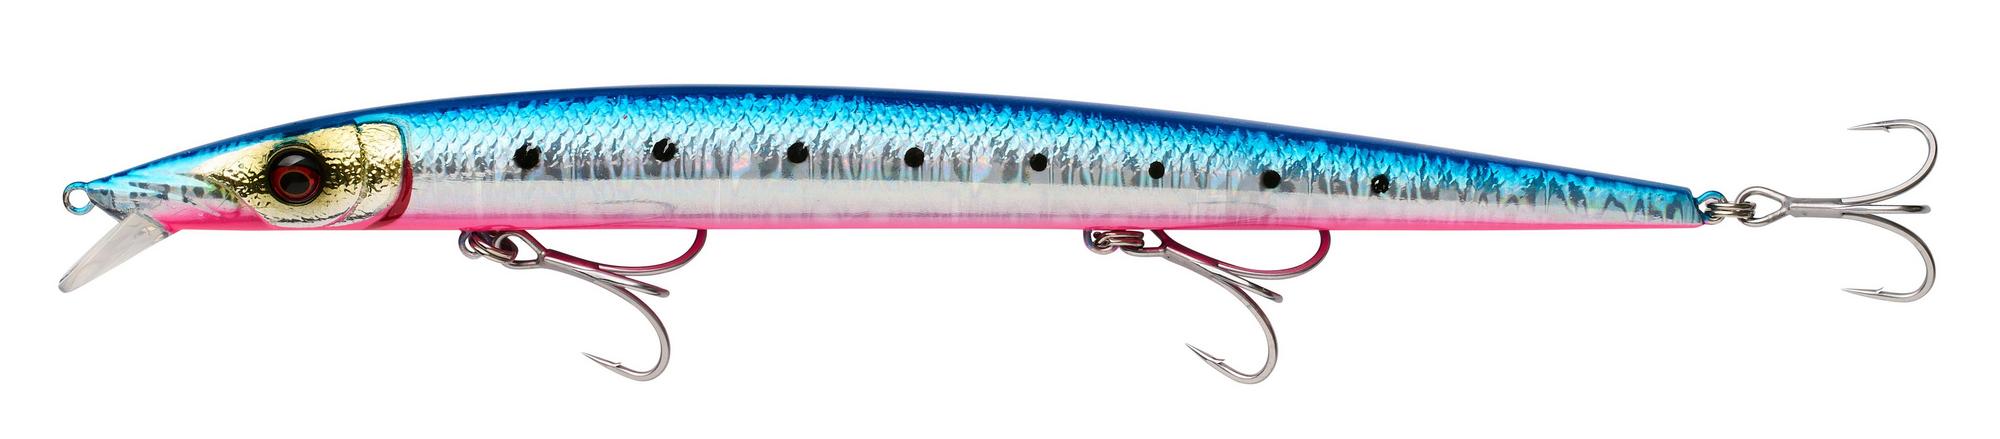 Savage Gear Barra Jerk Marine Fishing Lures 19cm (29g) - Pinkbelly Sardine